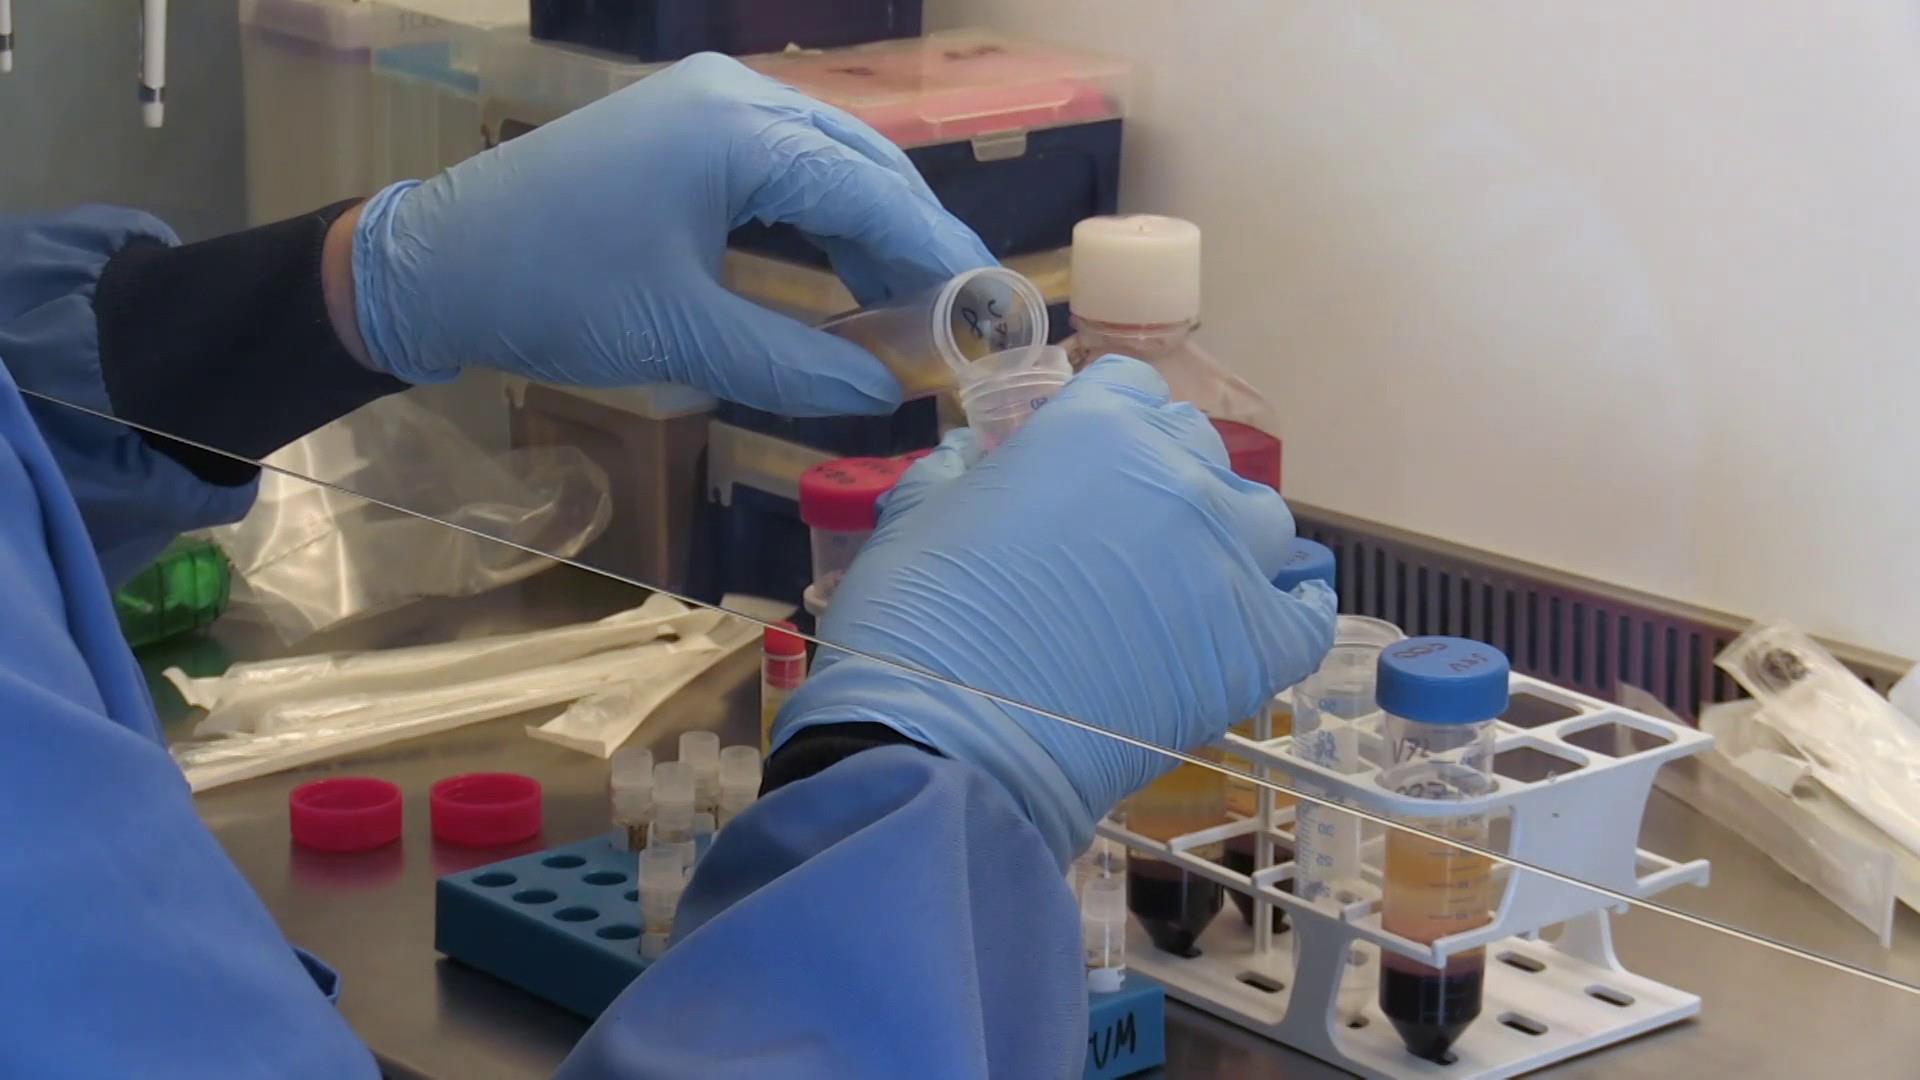 Oxford to test possible coronavirus vaccine on 10,000 people